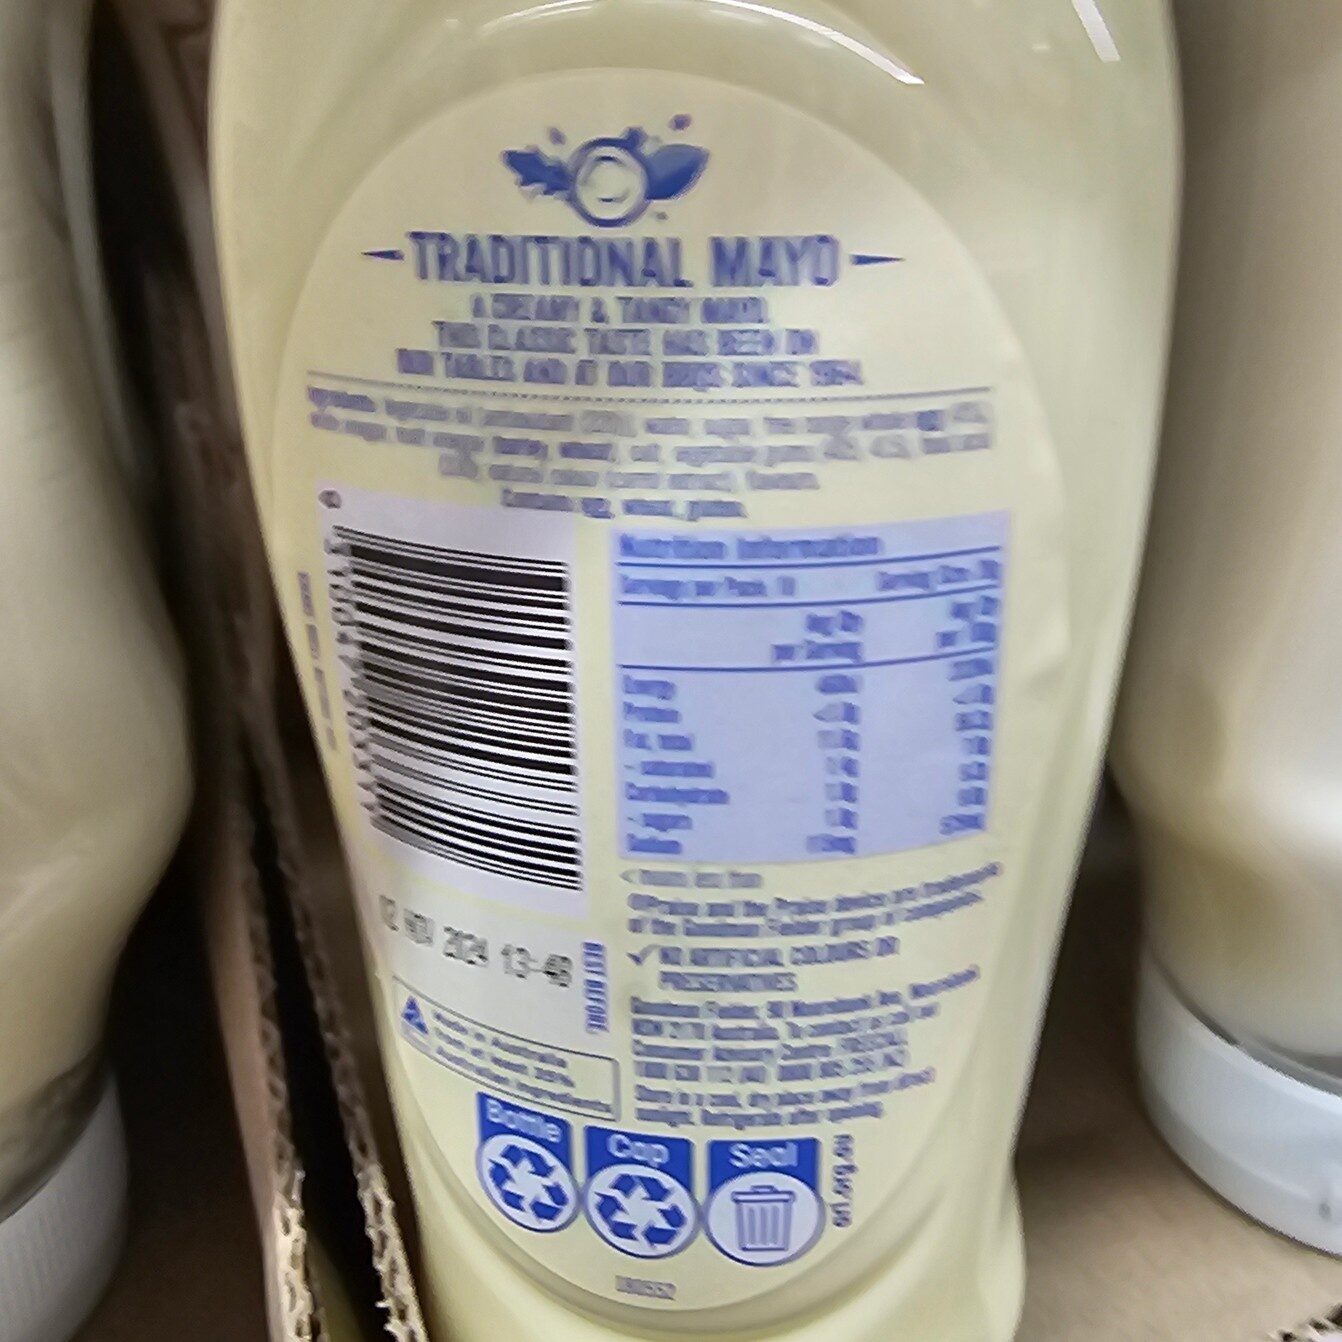 Praise Traditional Mayo - Ingredients